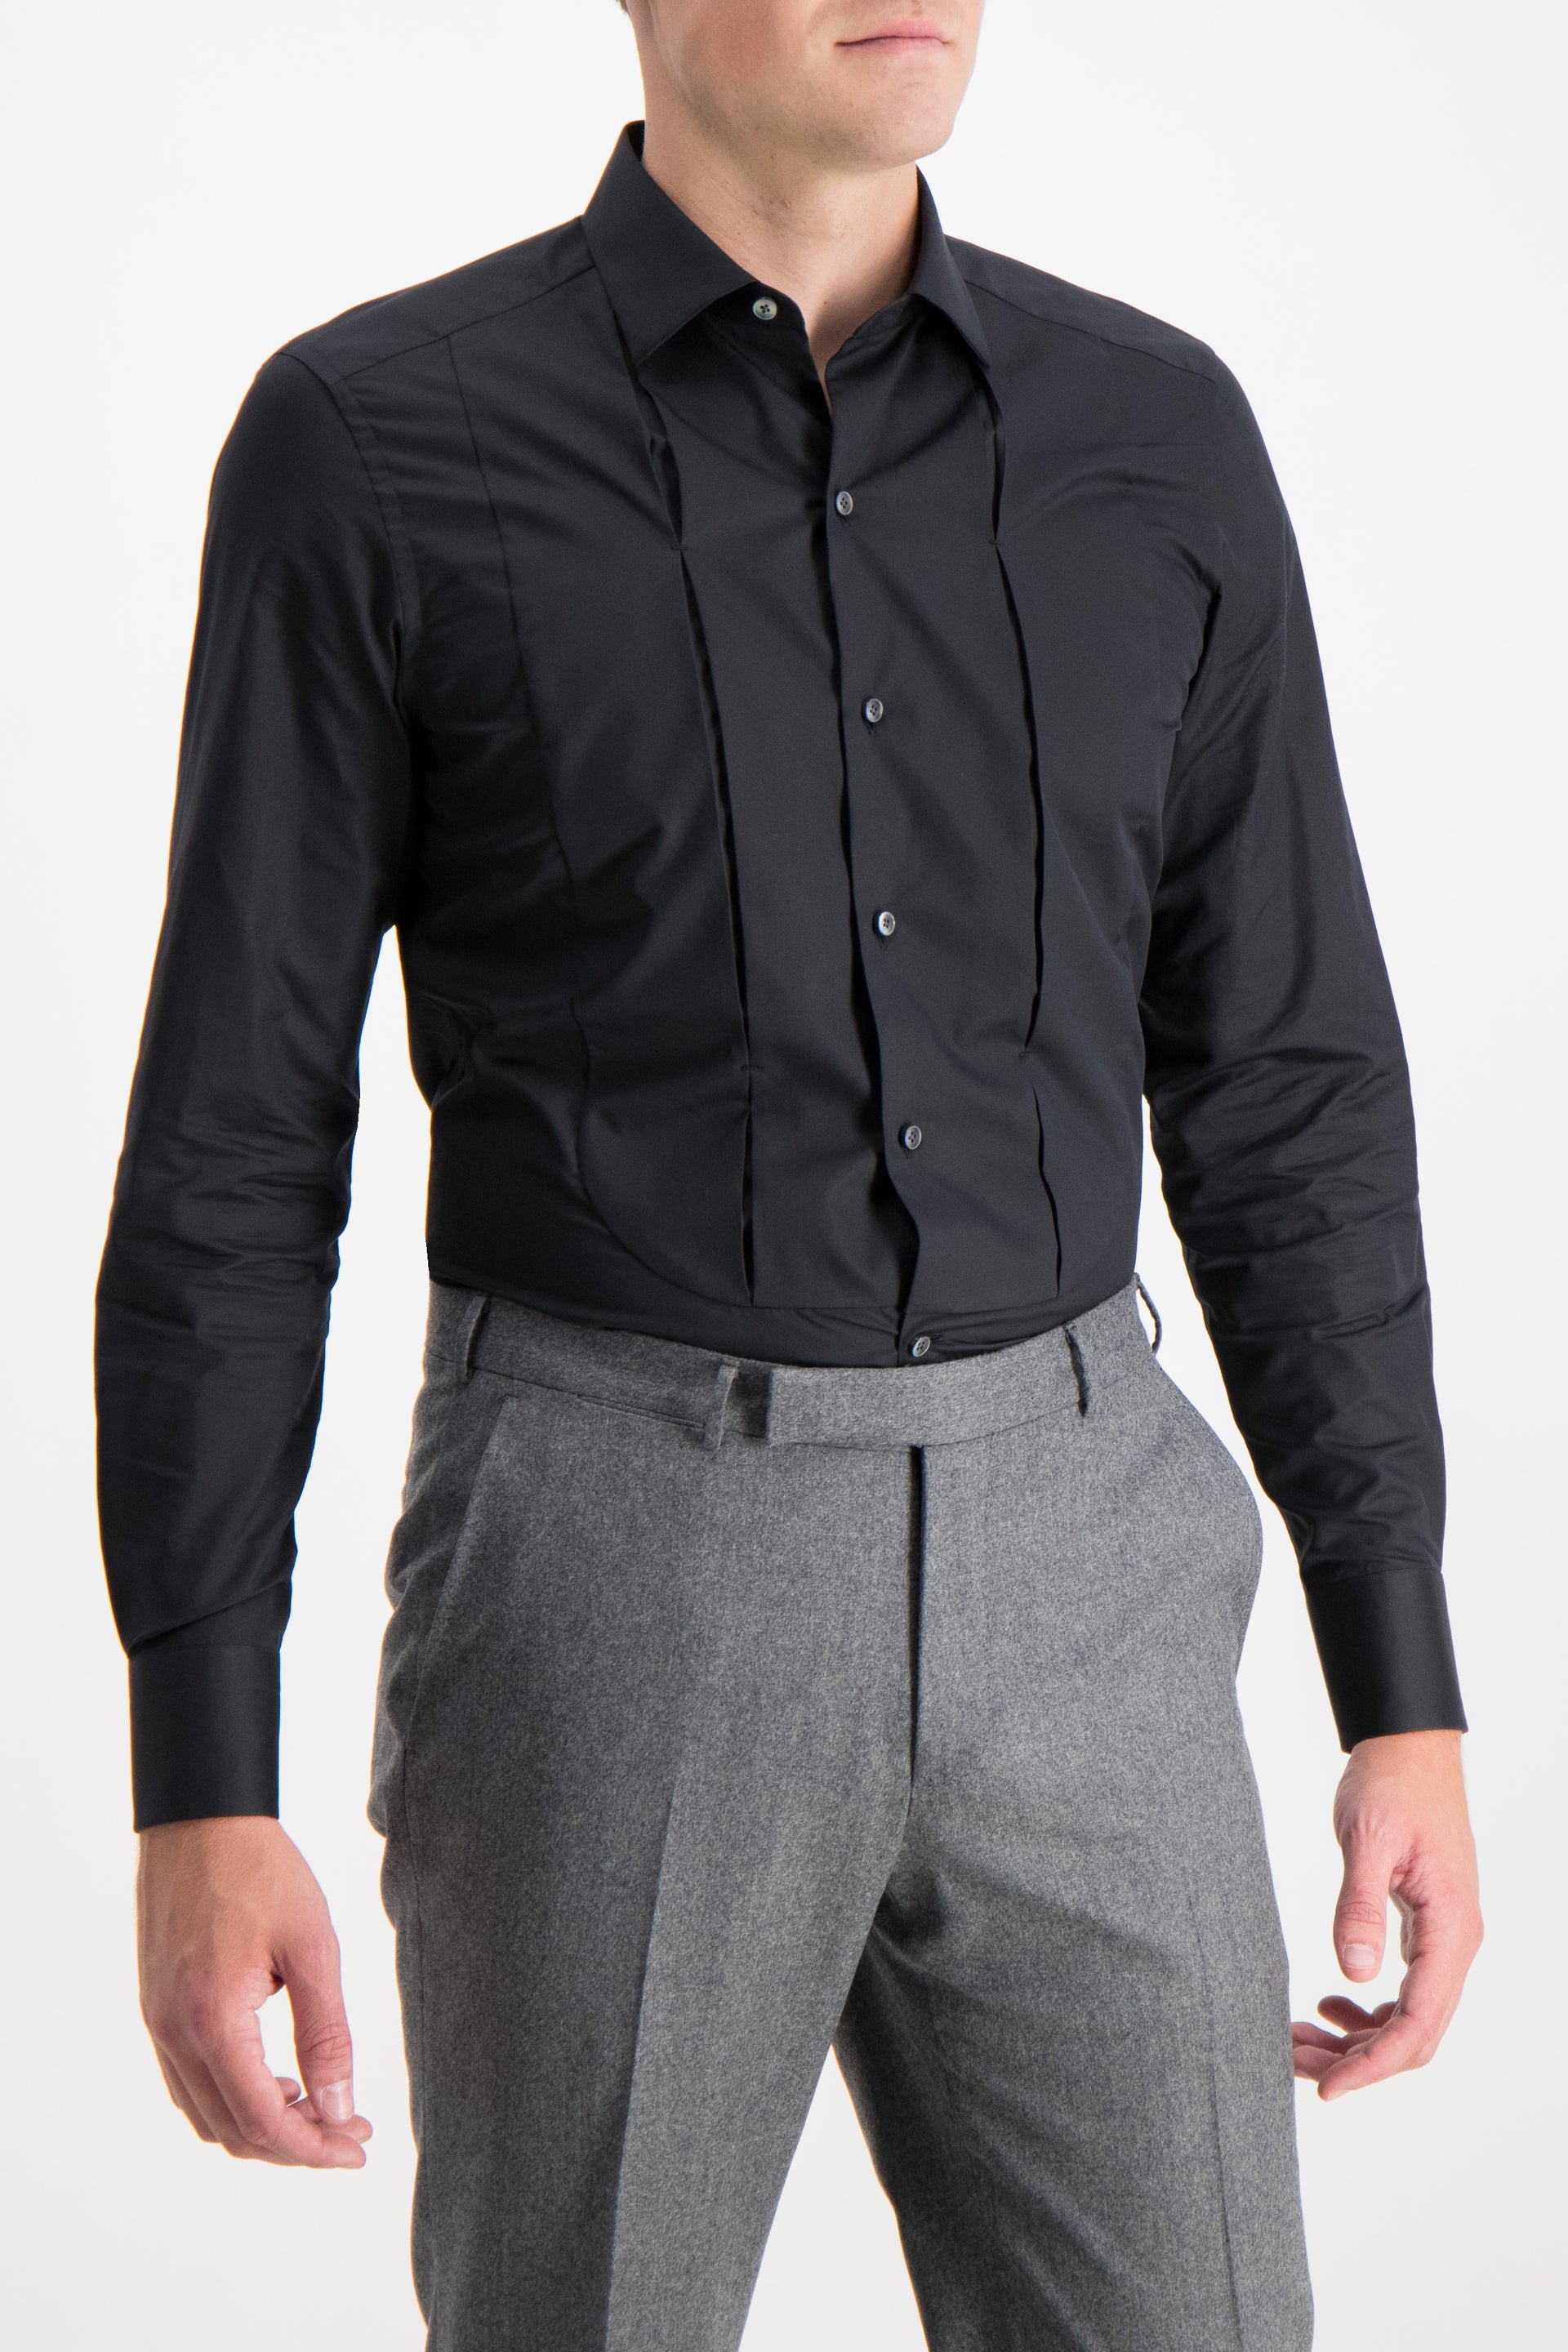 Long Sleeve Dress Shirt Pleat Black (1536575176819)